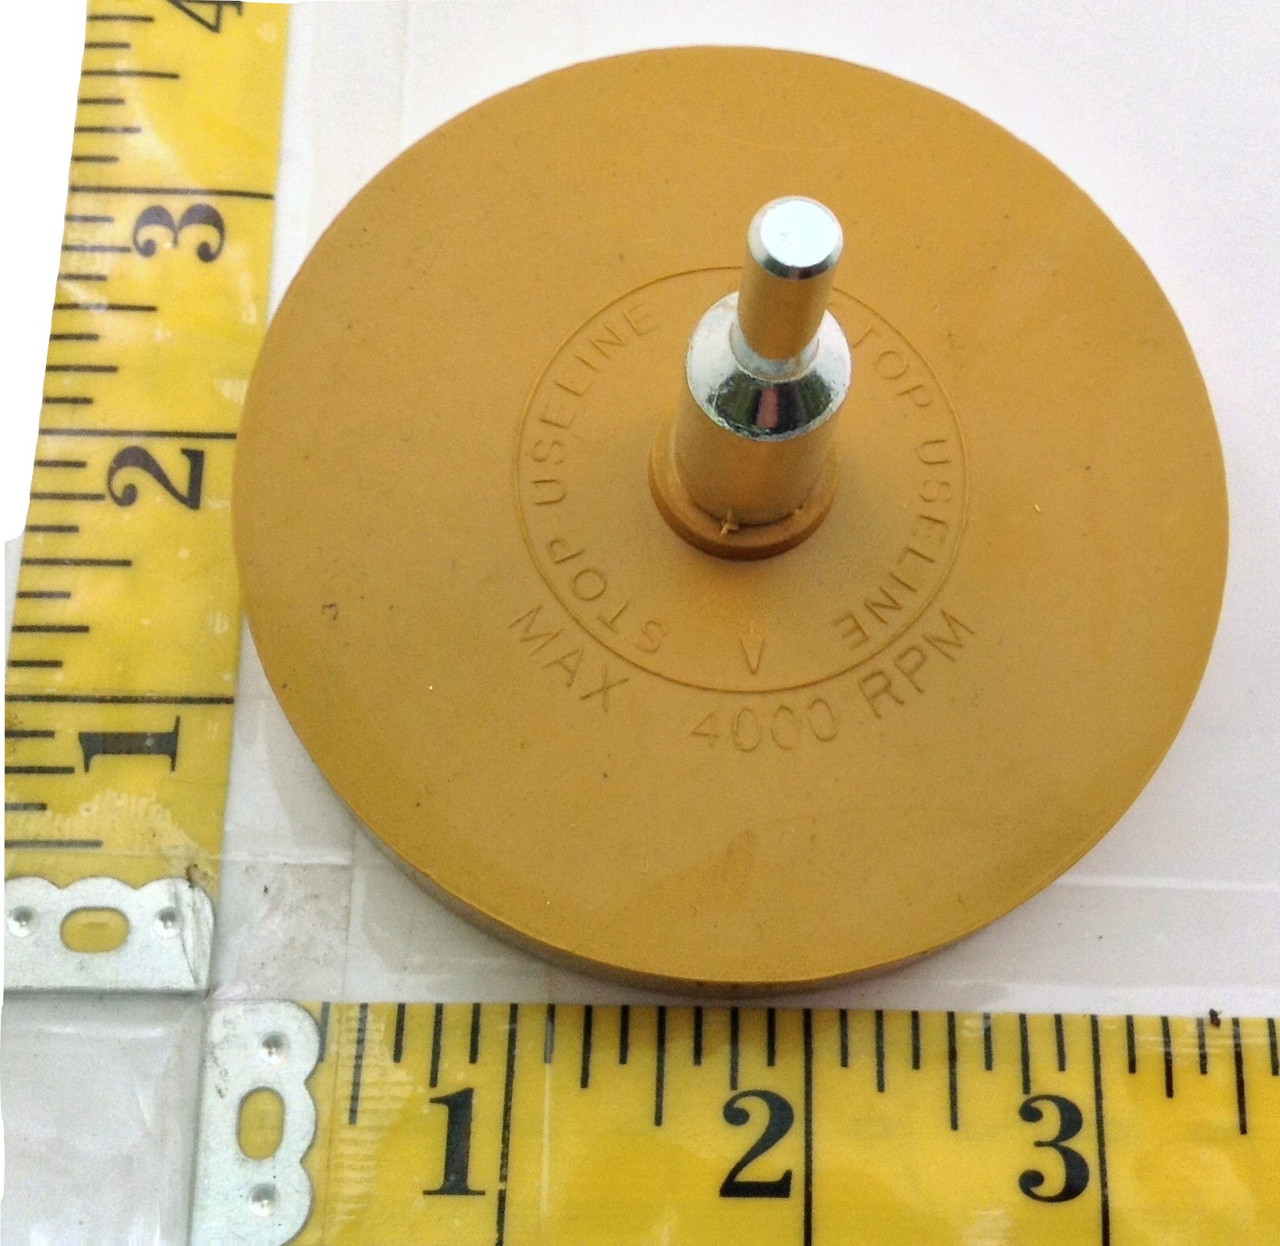 Rubber Eraser Wheel for Adhesive Sticker Pinstripe Decal Graphic